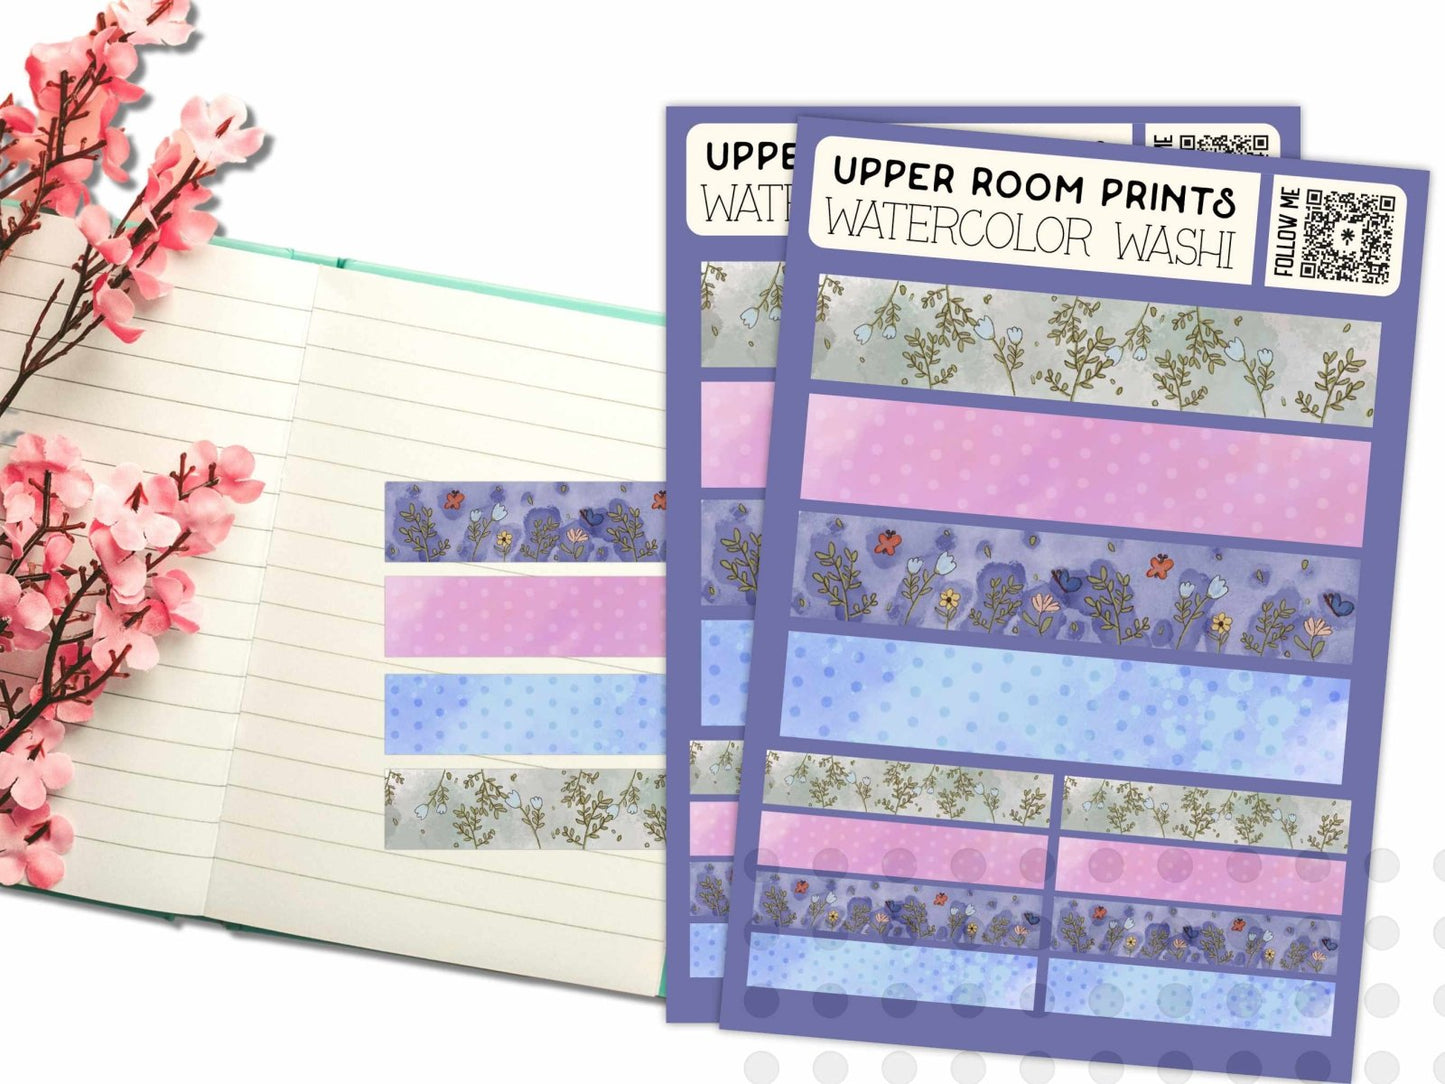 Watercolor Washi Sticker Sheet - Stickers - UpperRoomPrints